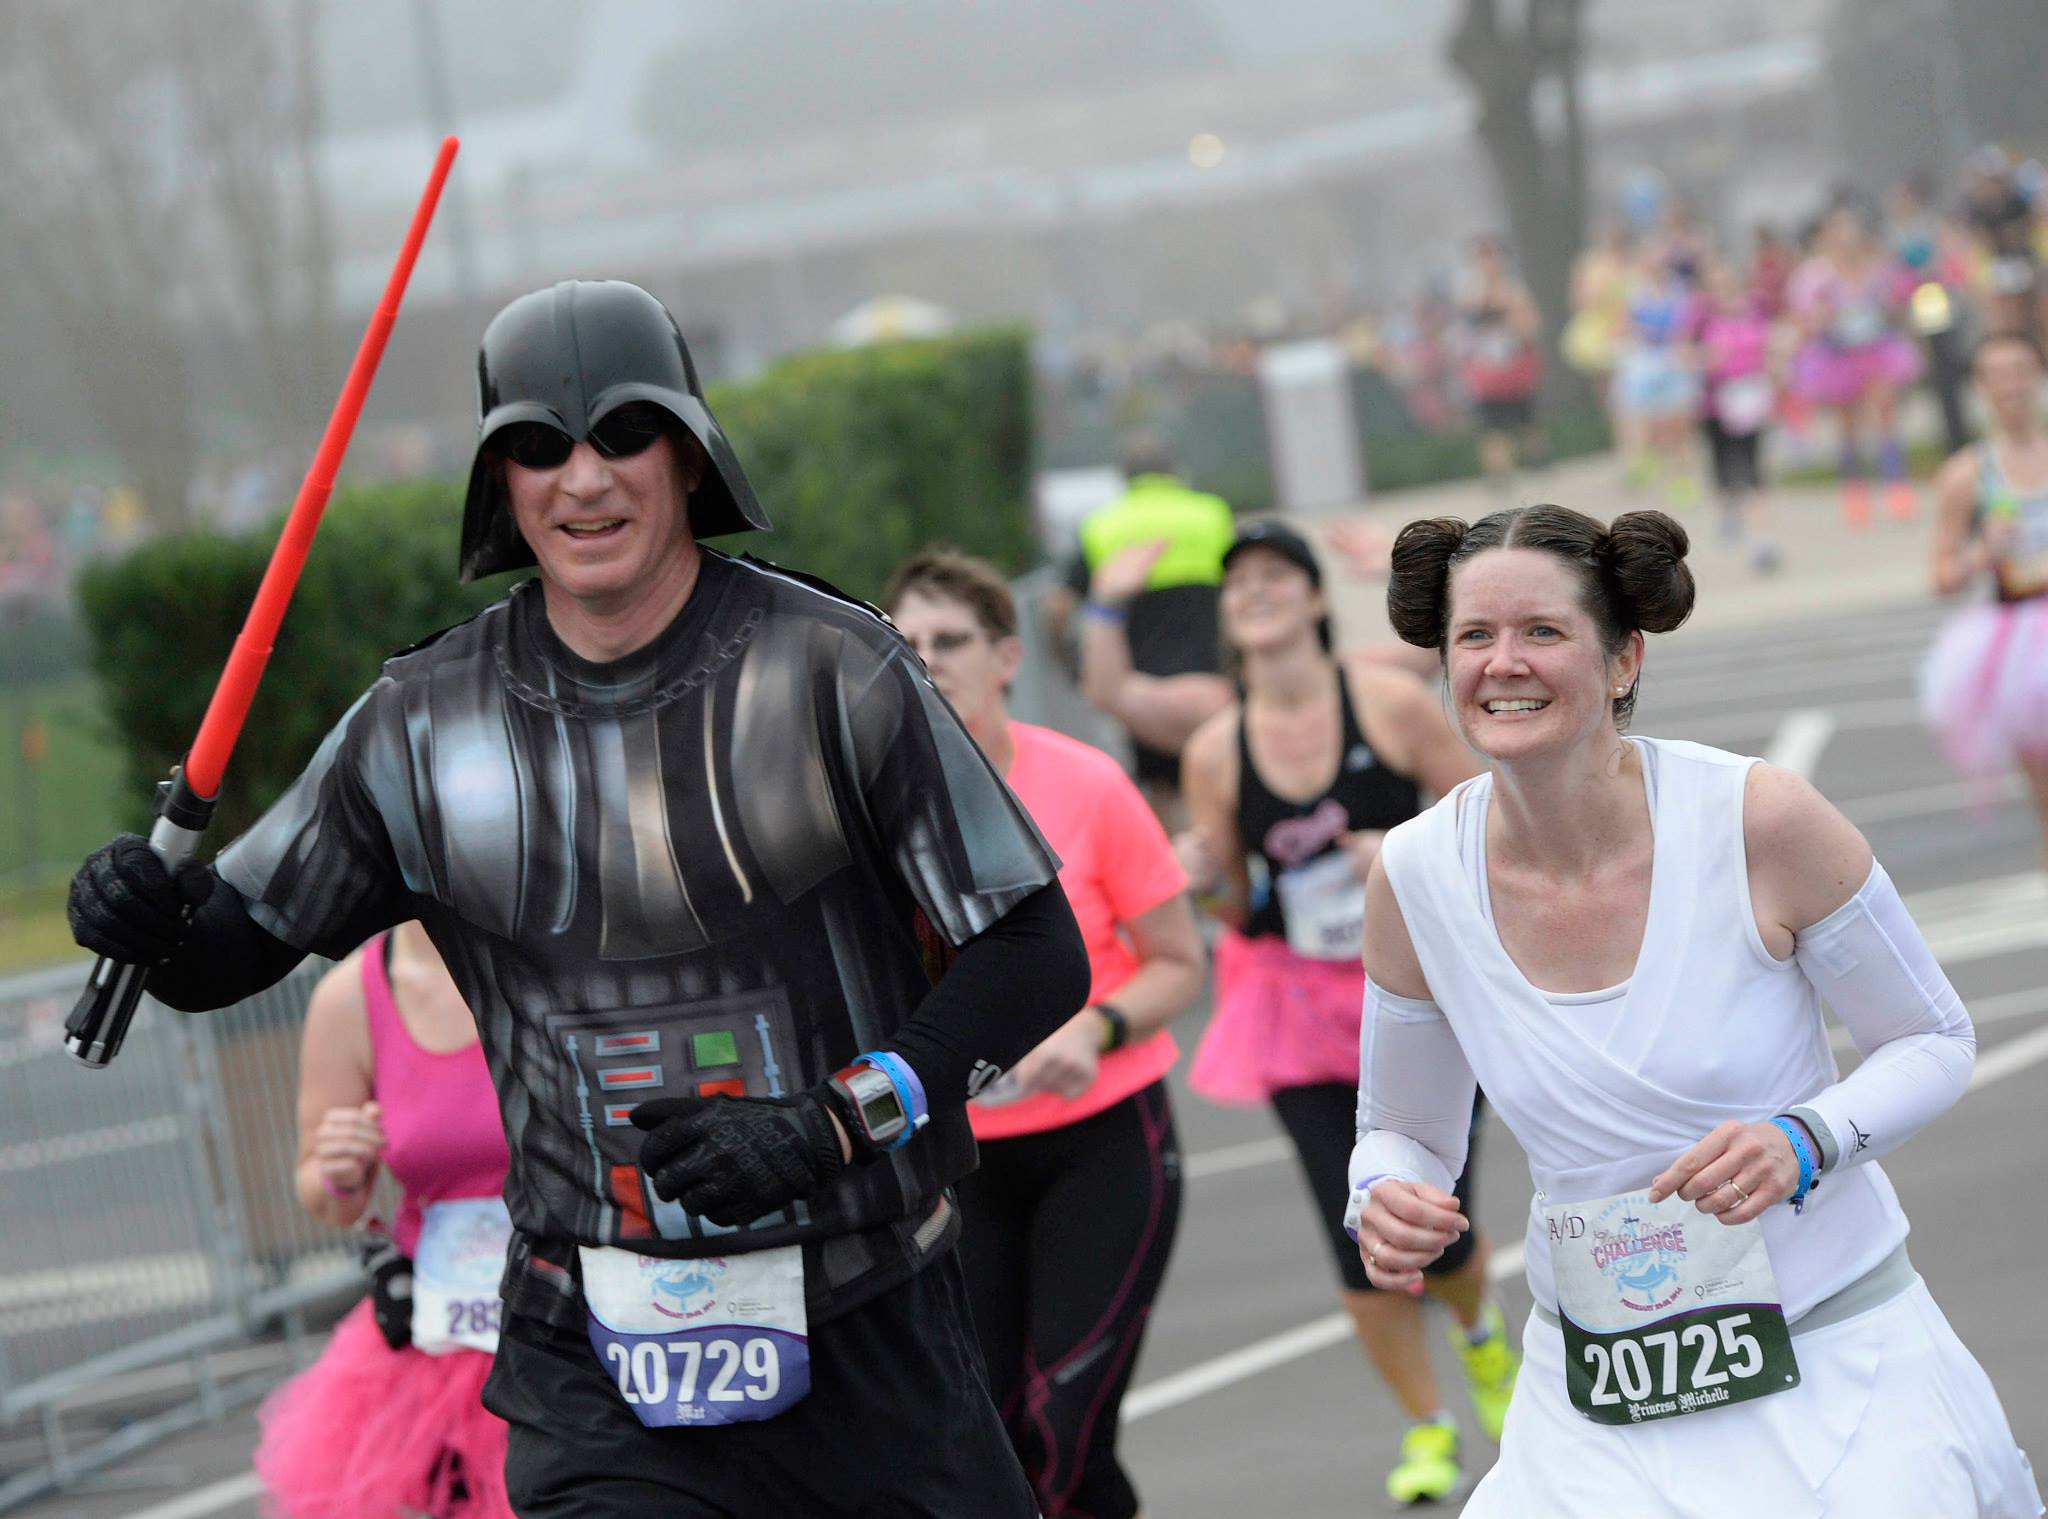 Star Wars 10k and Half Marathon Coming in 2015